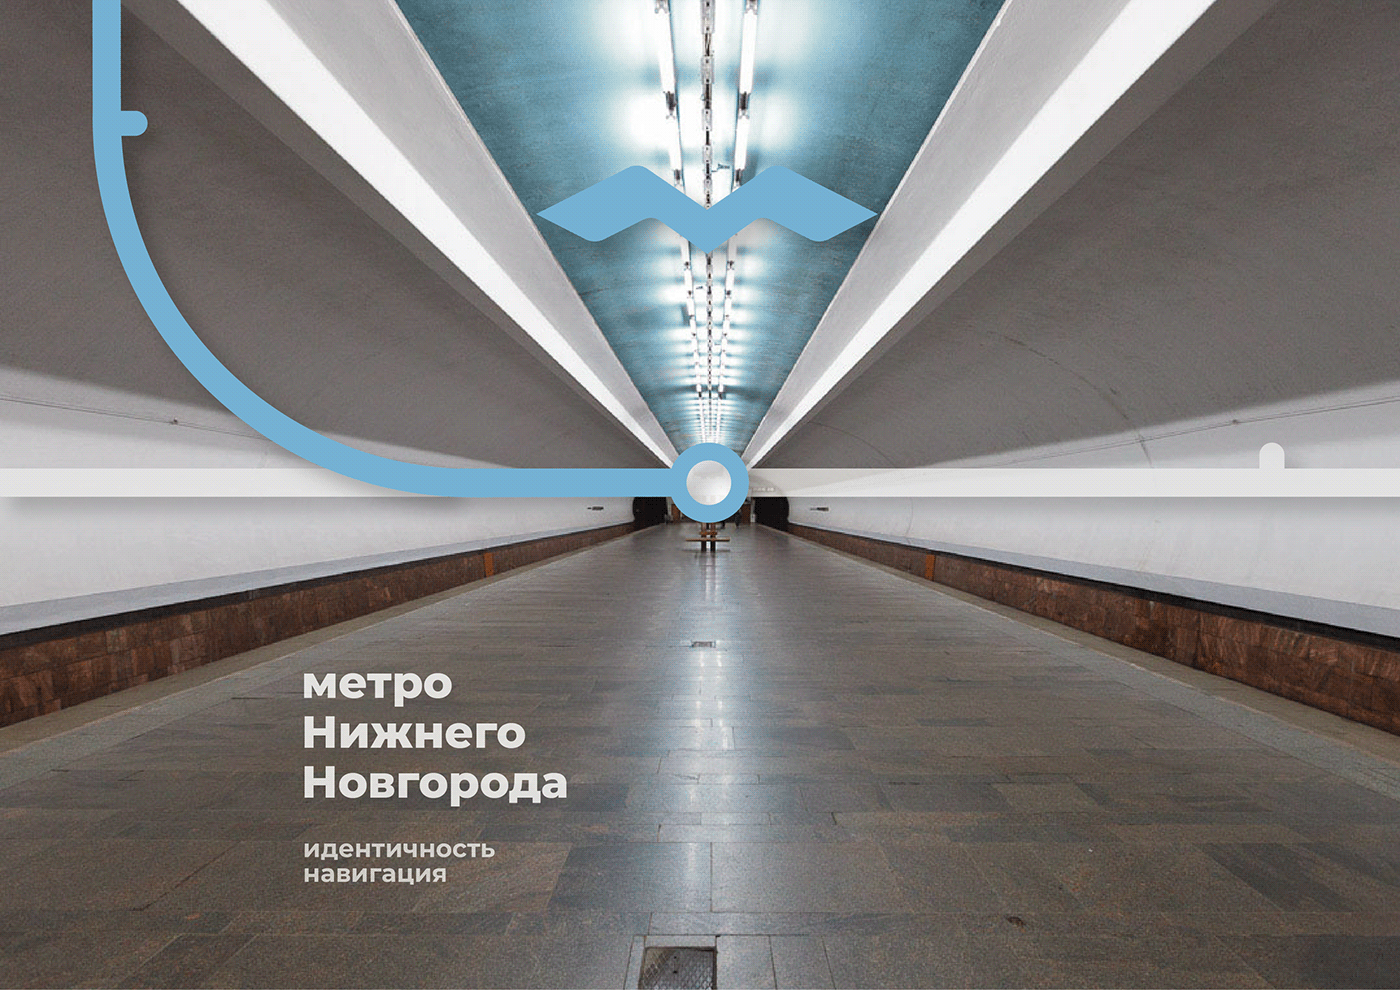 метро metro mapdesign metromap subway нижний новгород Nizhny Novgorod navigation навигация NavigationDesign